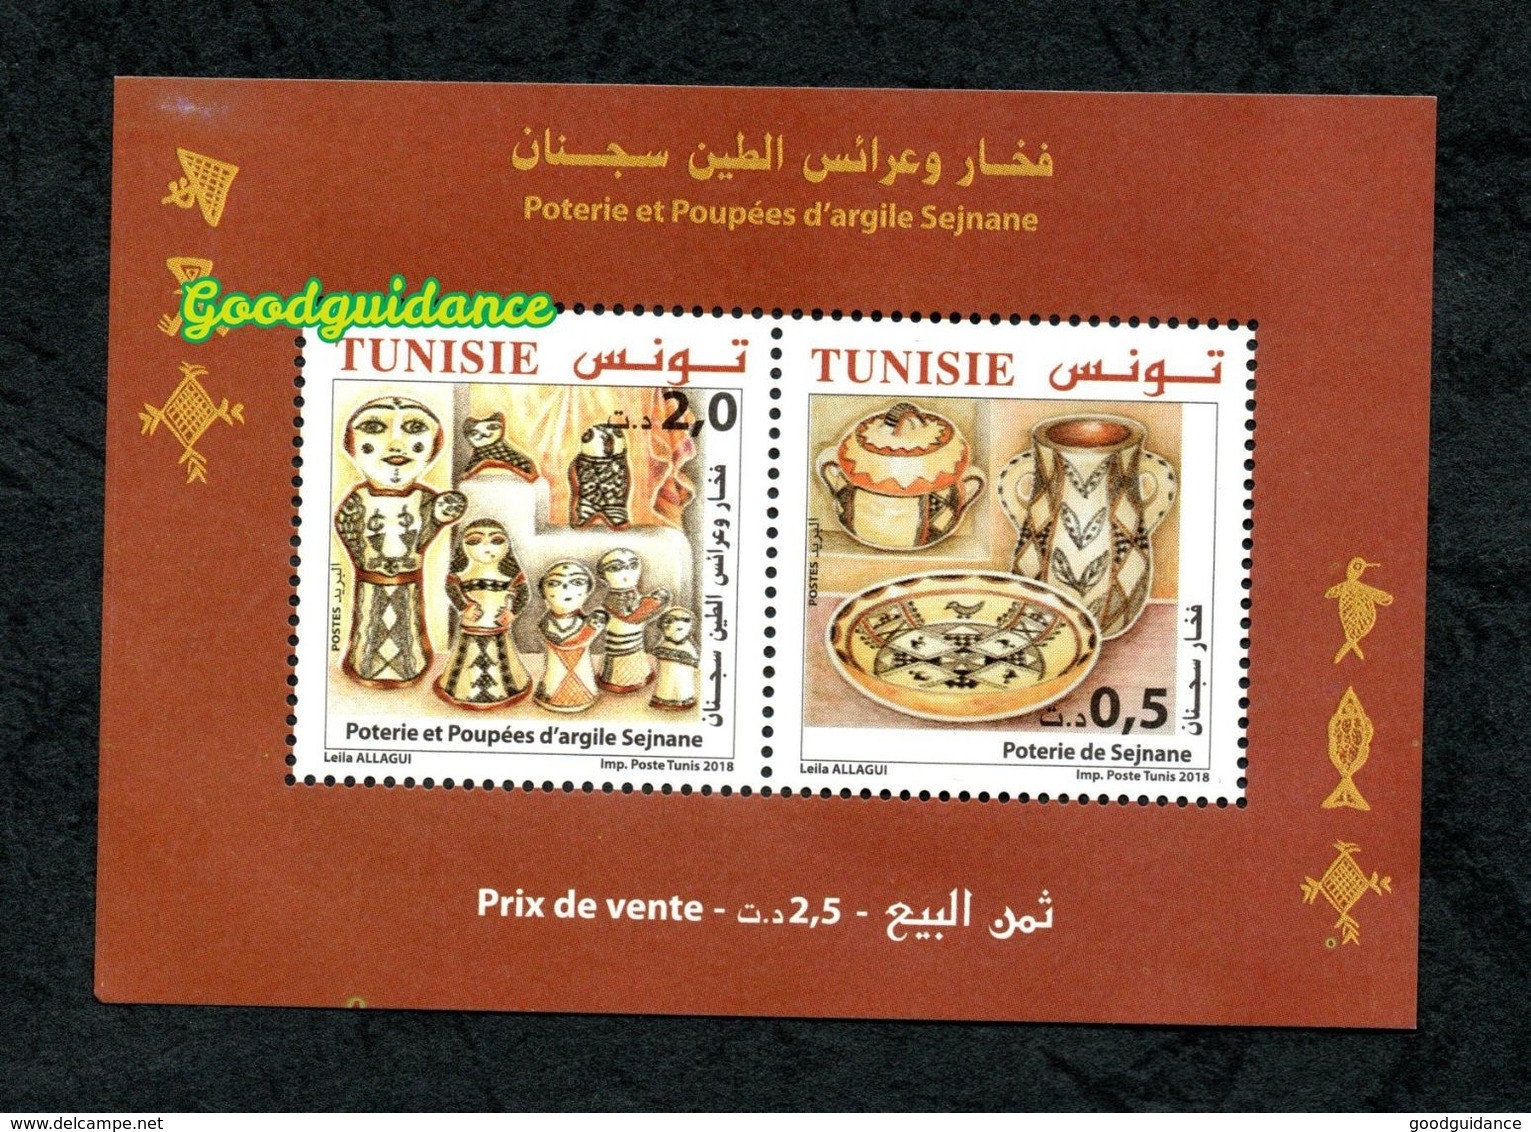 2018- Tunisia- Tunisie- Poterie De Tunise - Pottery Of Tunisia- Perforatd Block - Block Perforé- MNH** - Porcelain